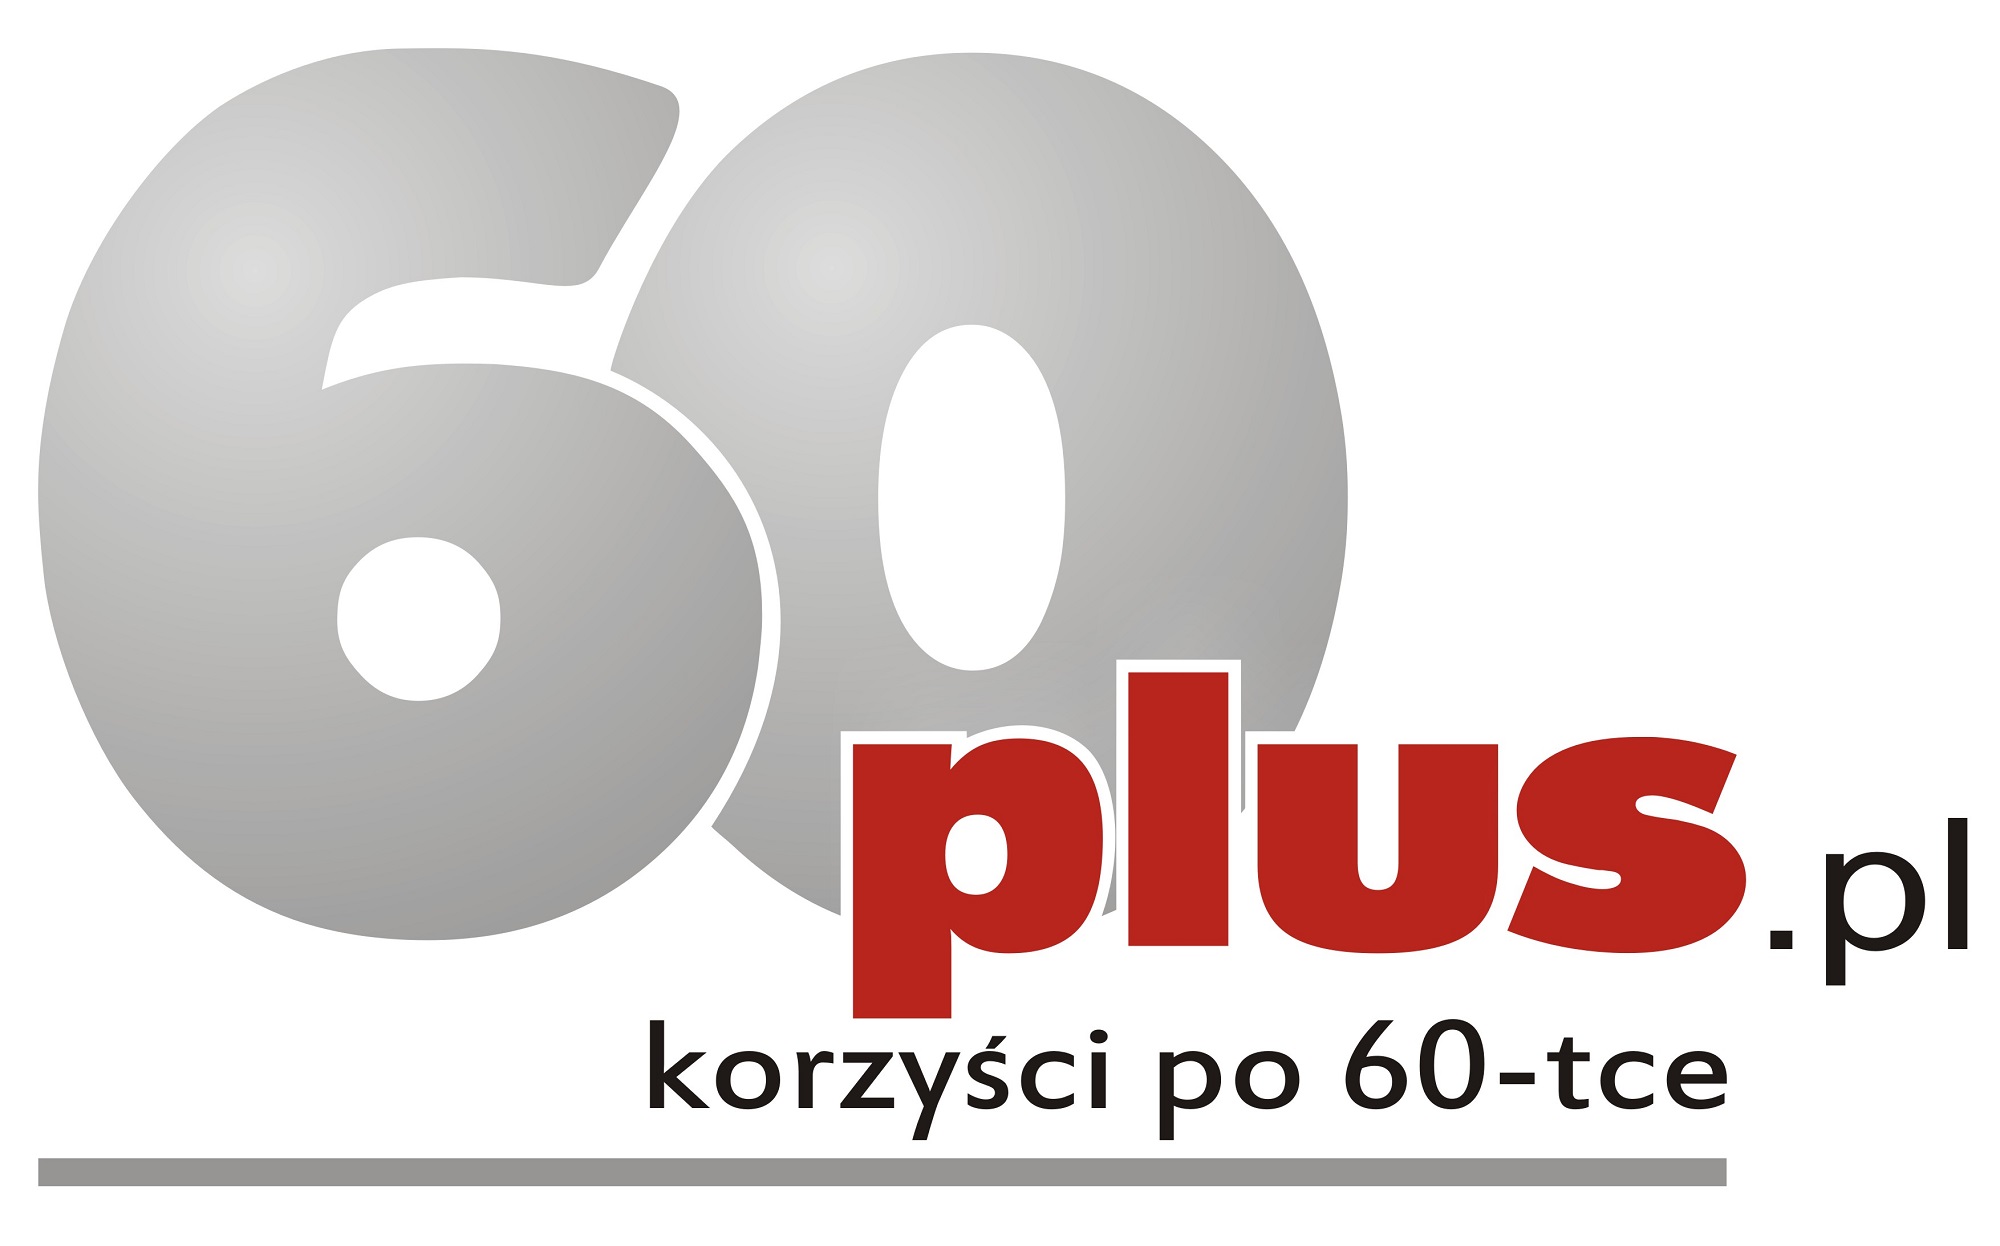 Logotyp portalu 60plus.pl